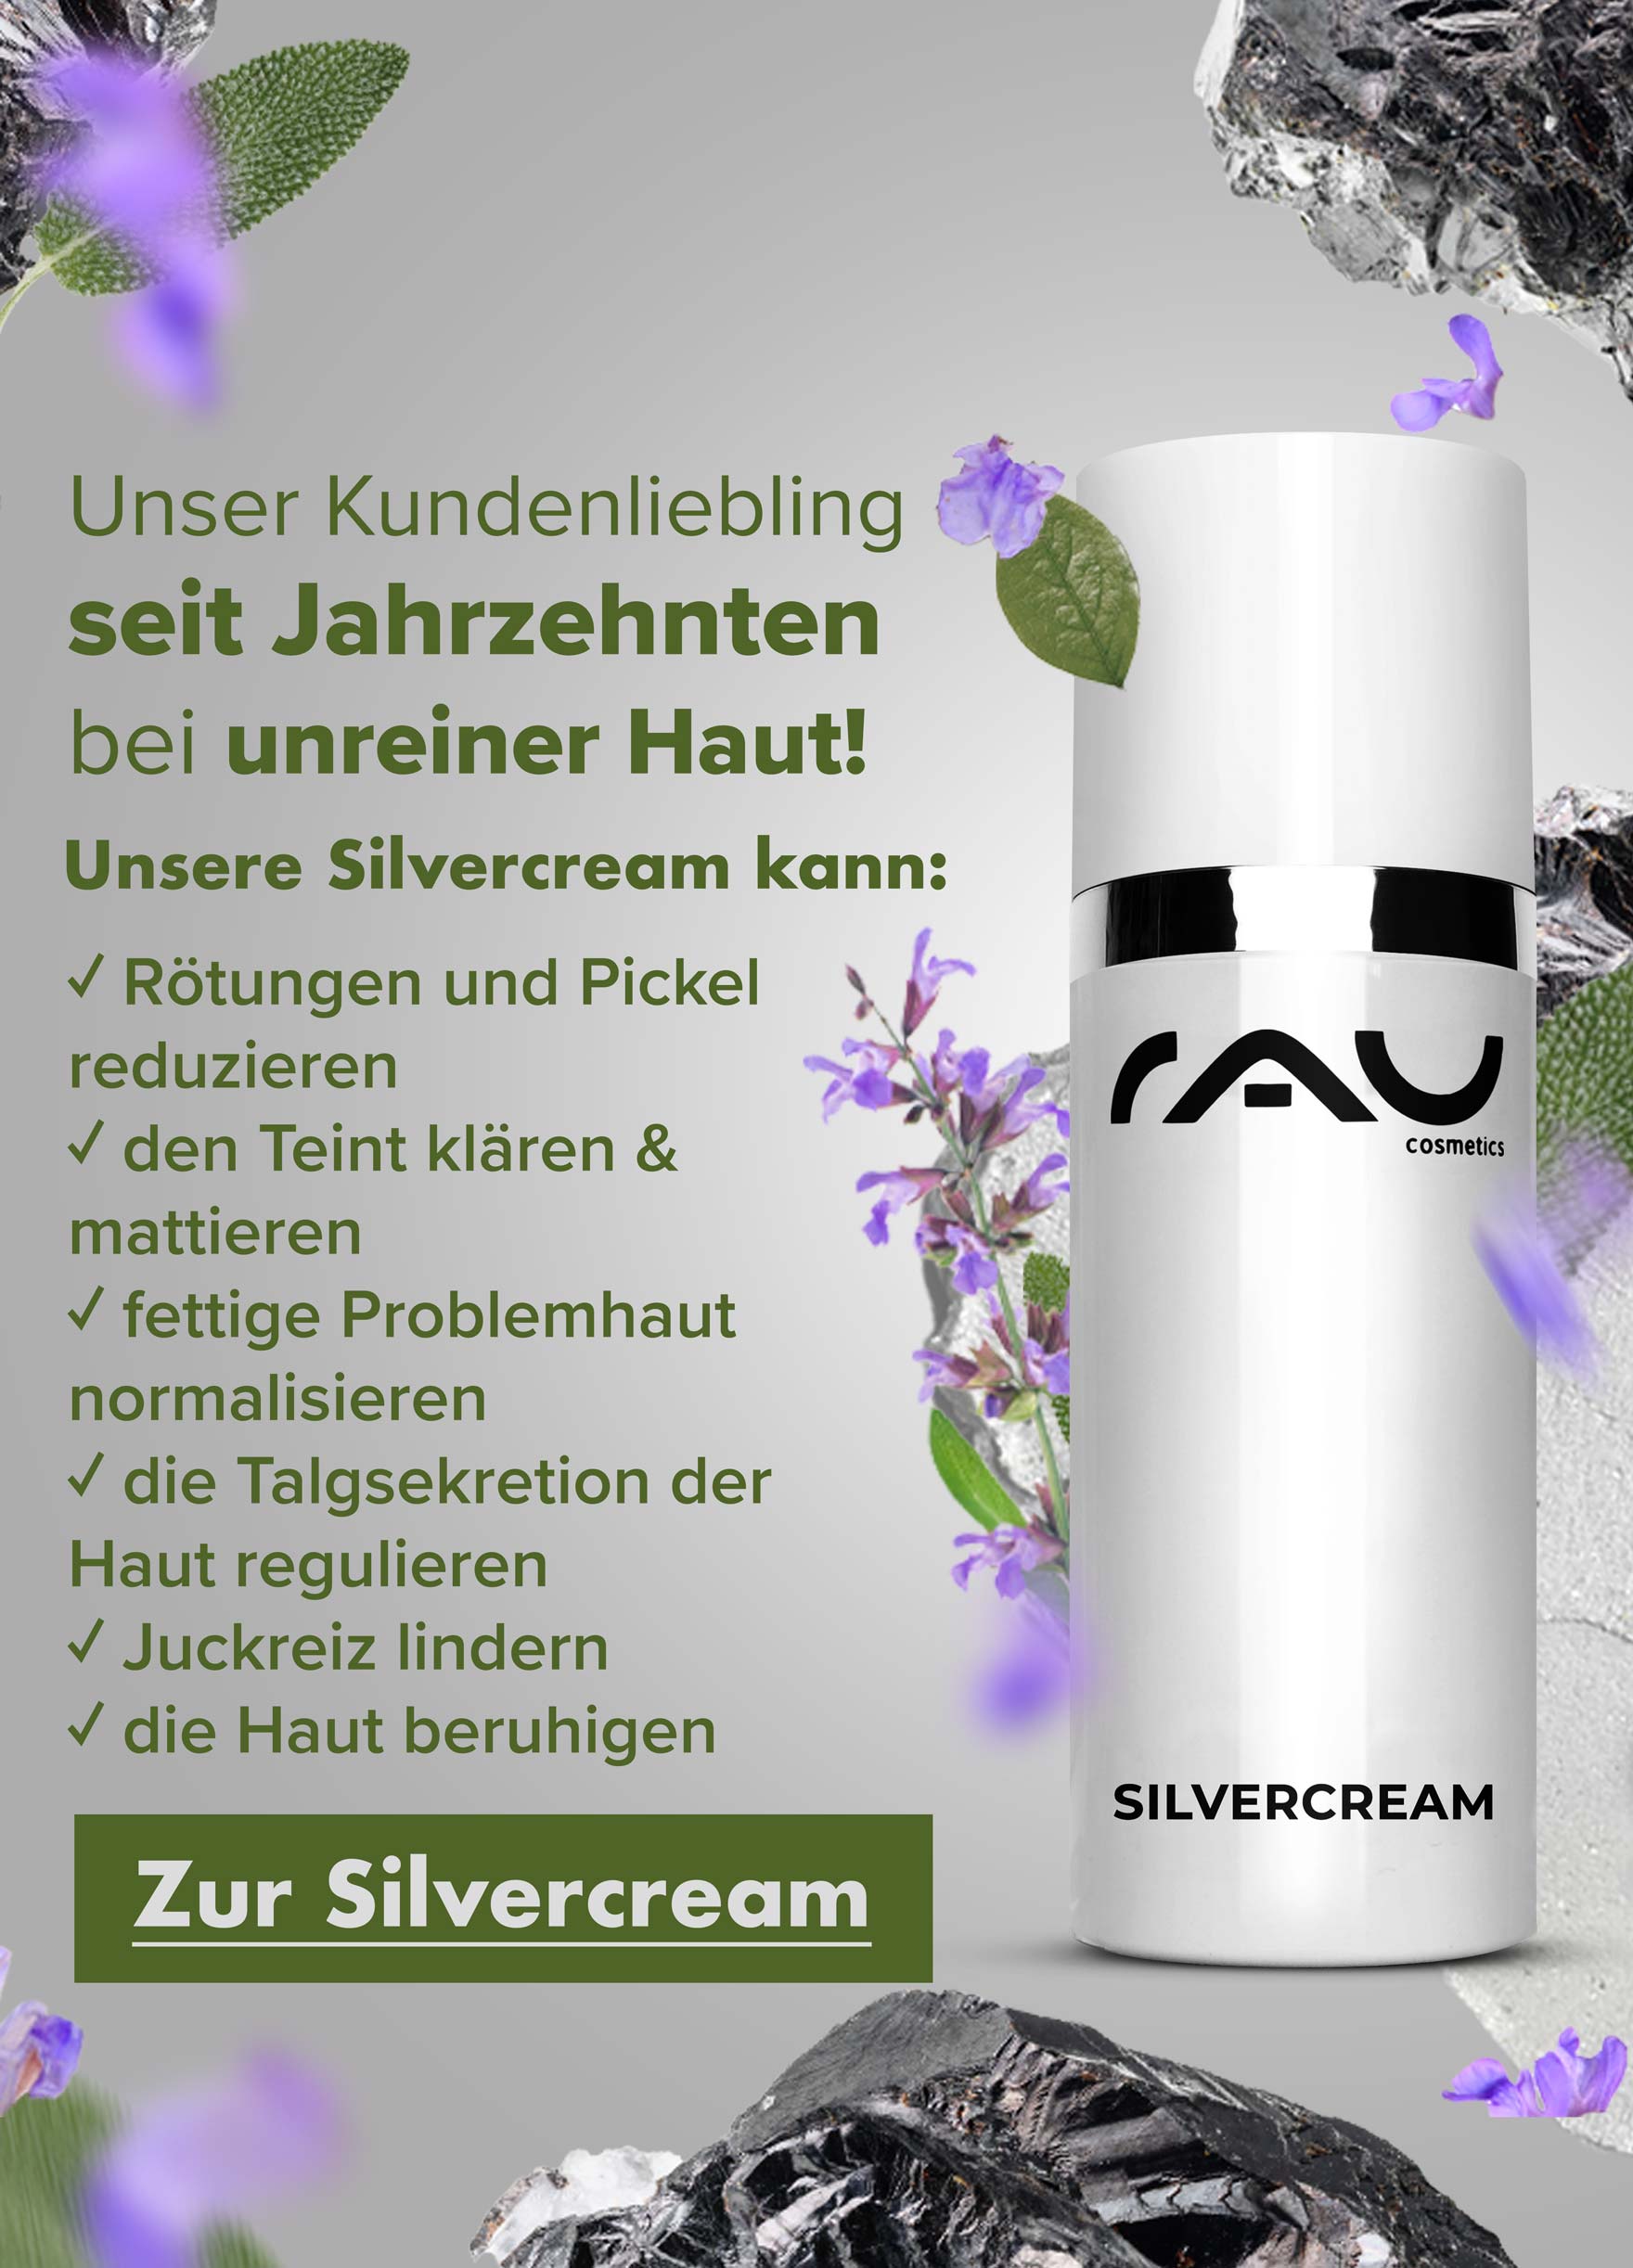 rau-cosmetics_herbsthautpflege-2023-gesichtspflege-kosmetik-onlineshop-wirkstoffkosmetik-silvercream-mobile